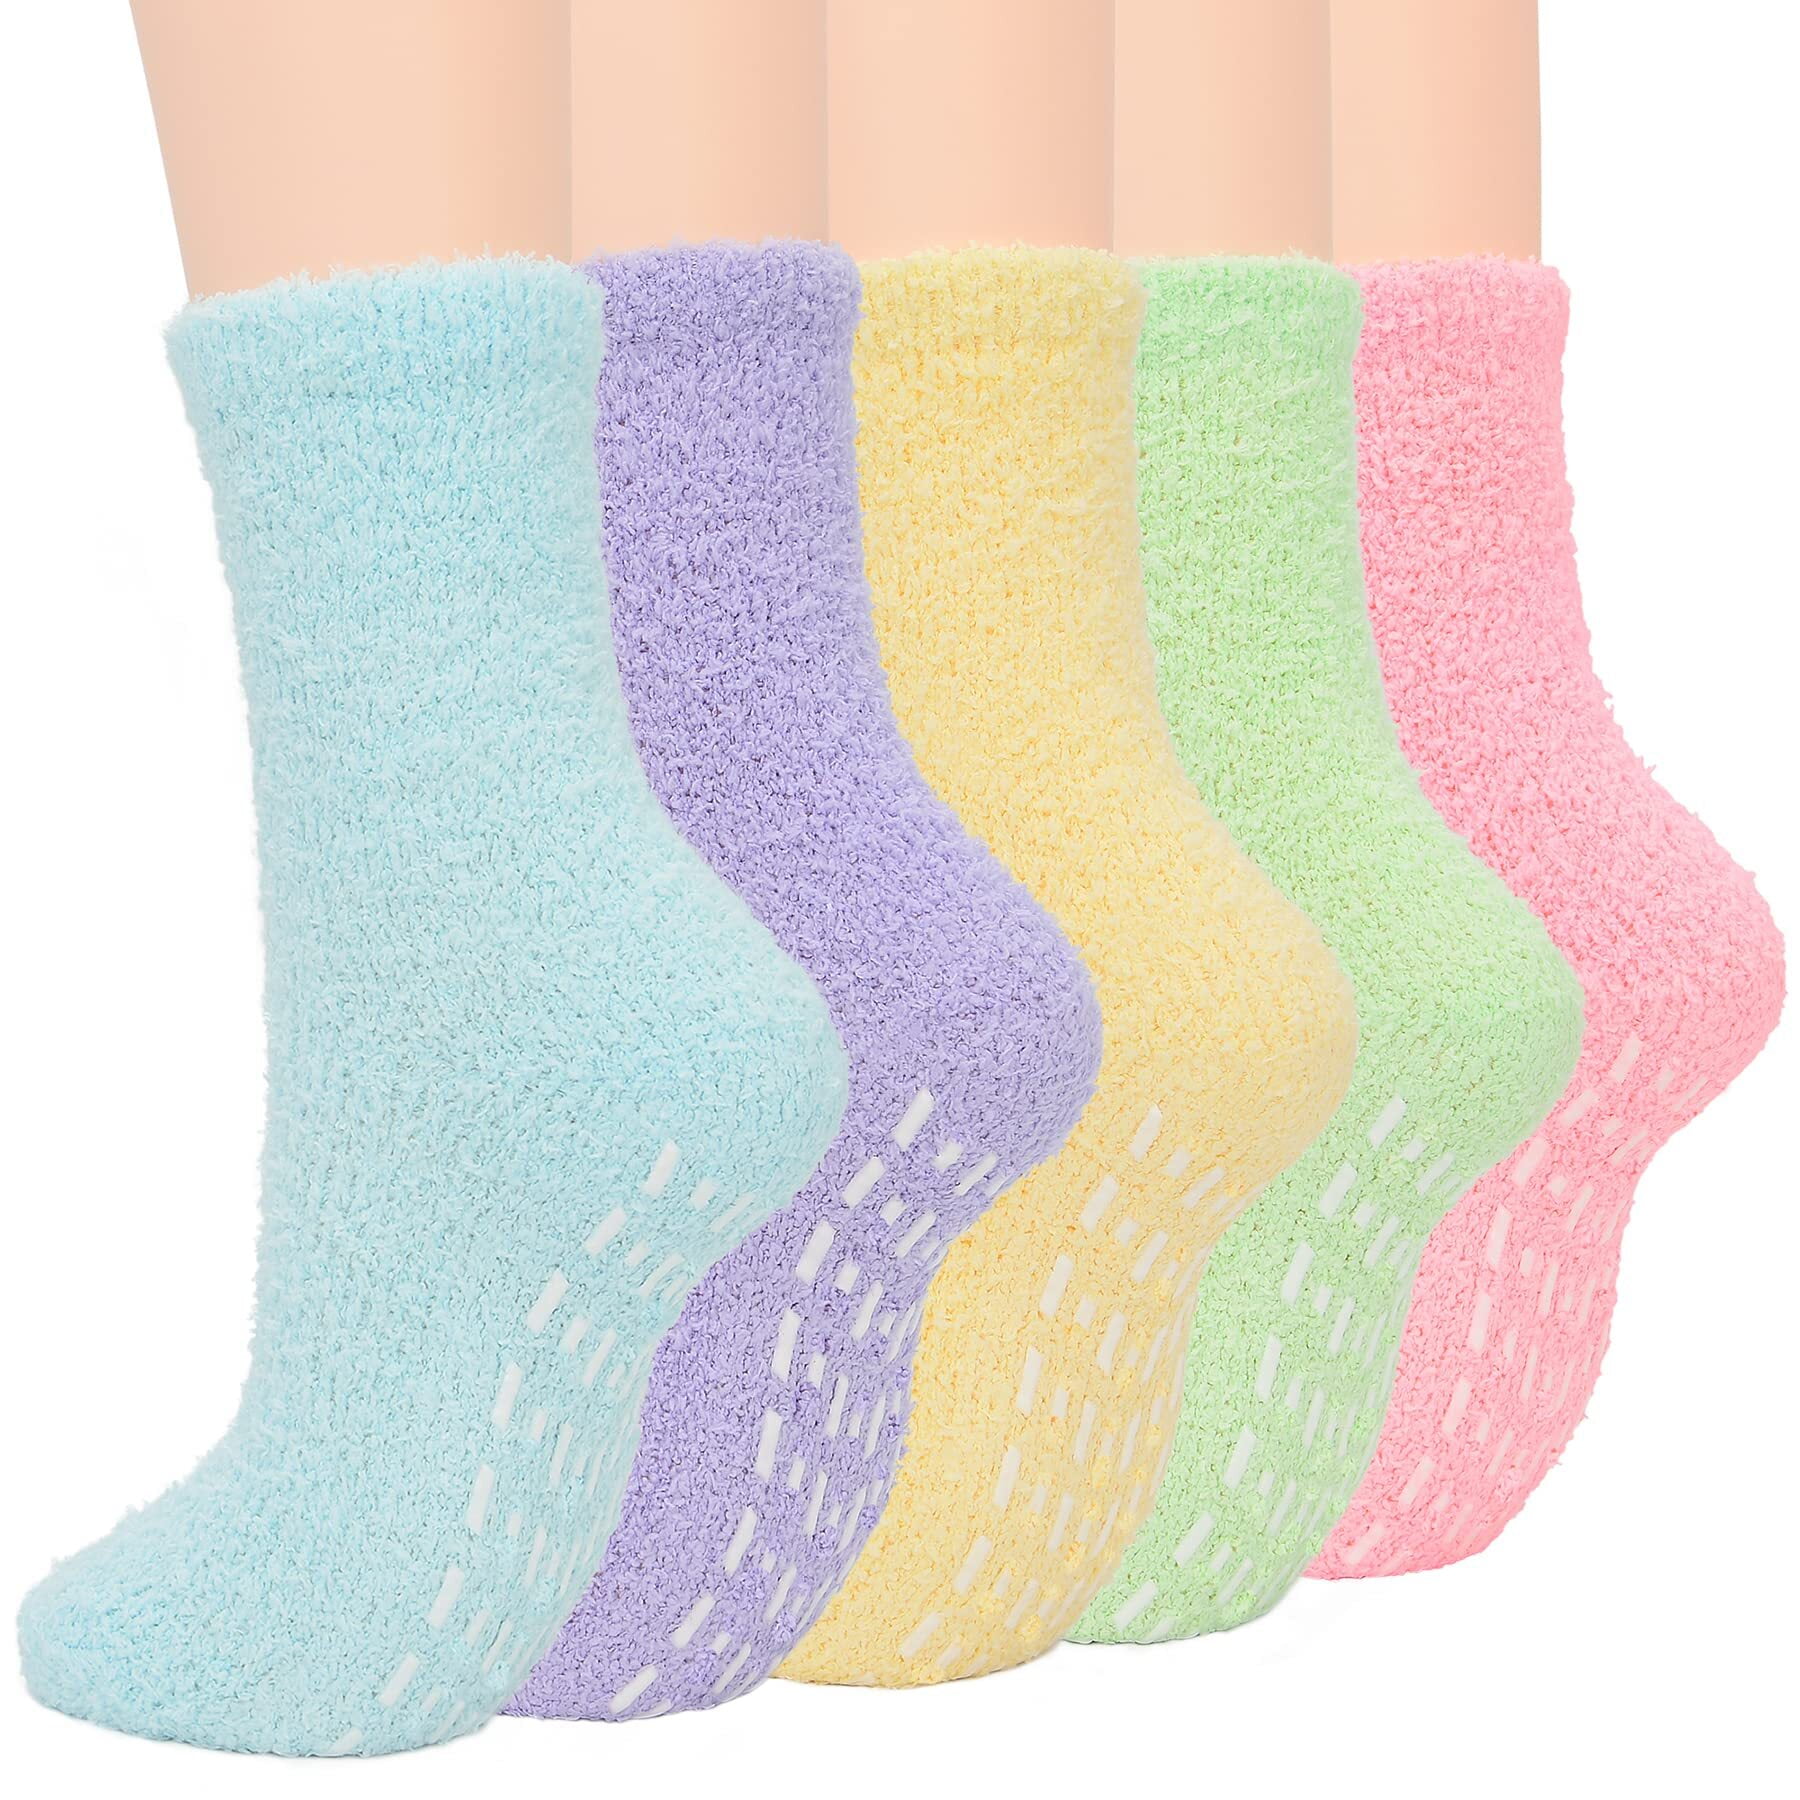 Footies Slipper Socks For Women, Grip Socks Thick Winter Fluffy